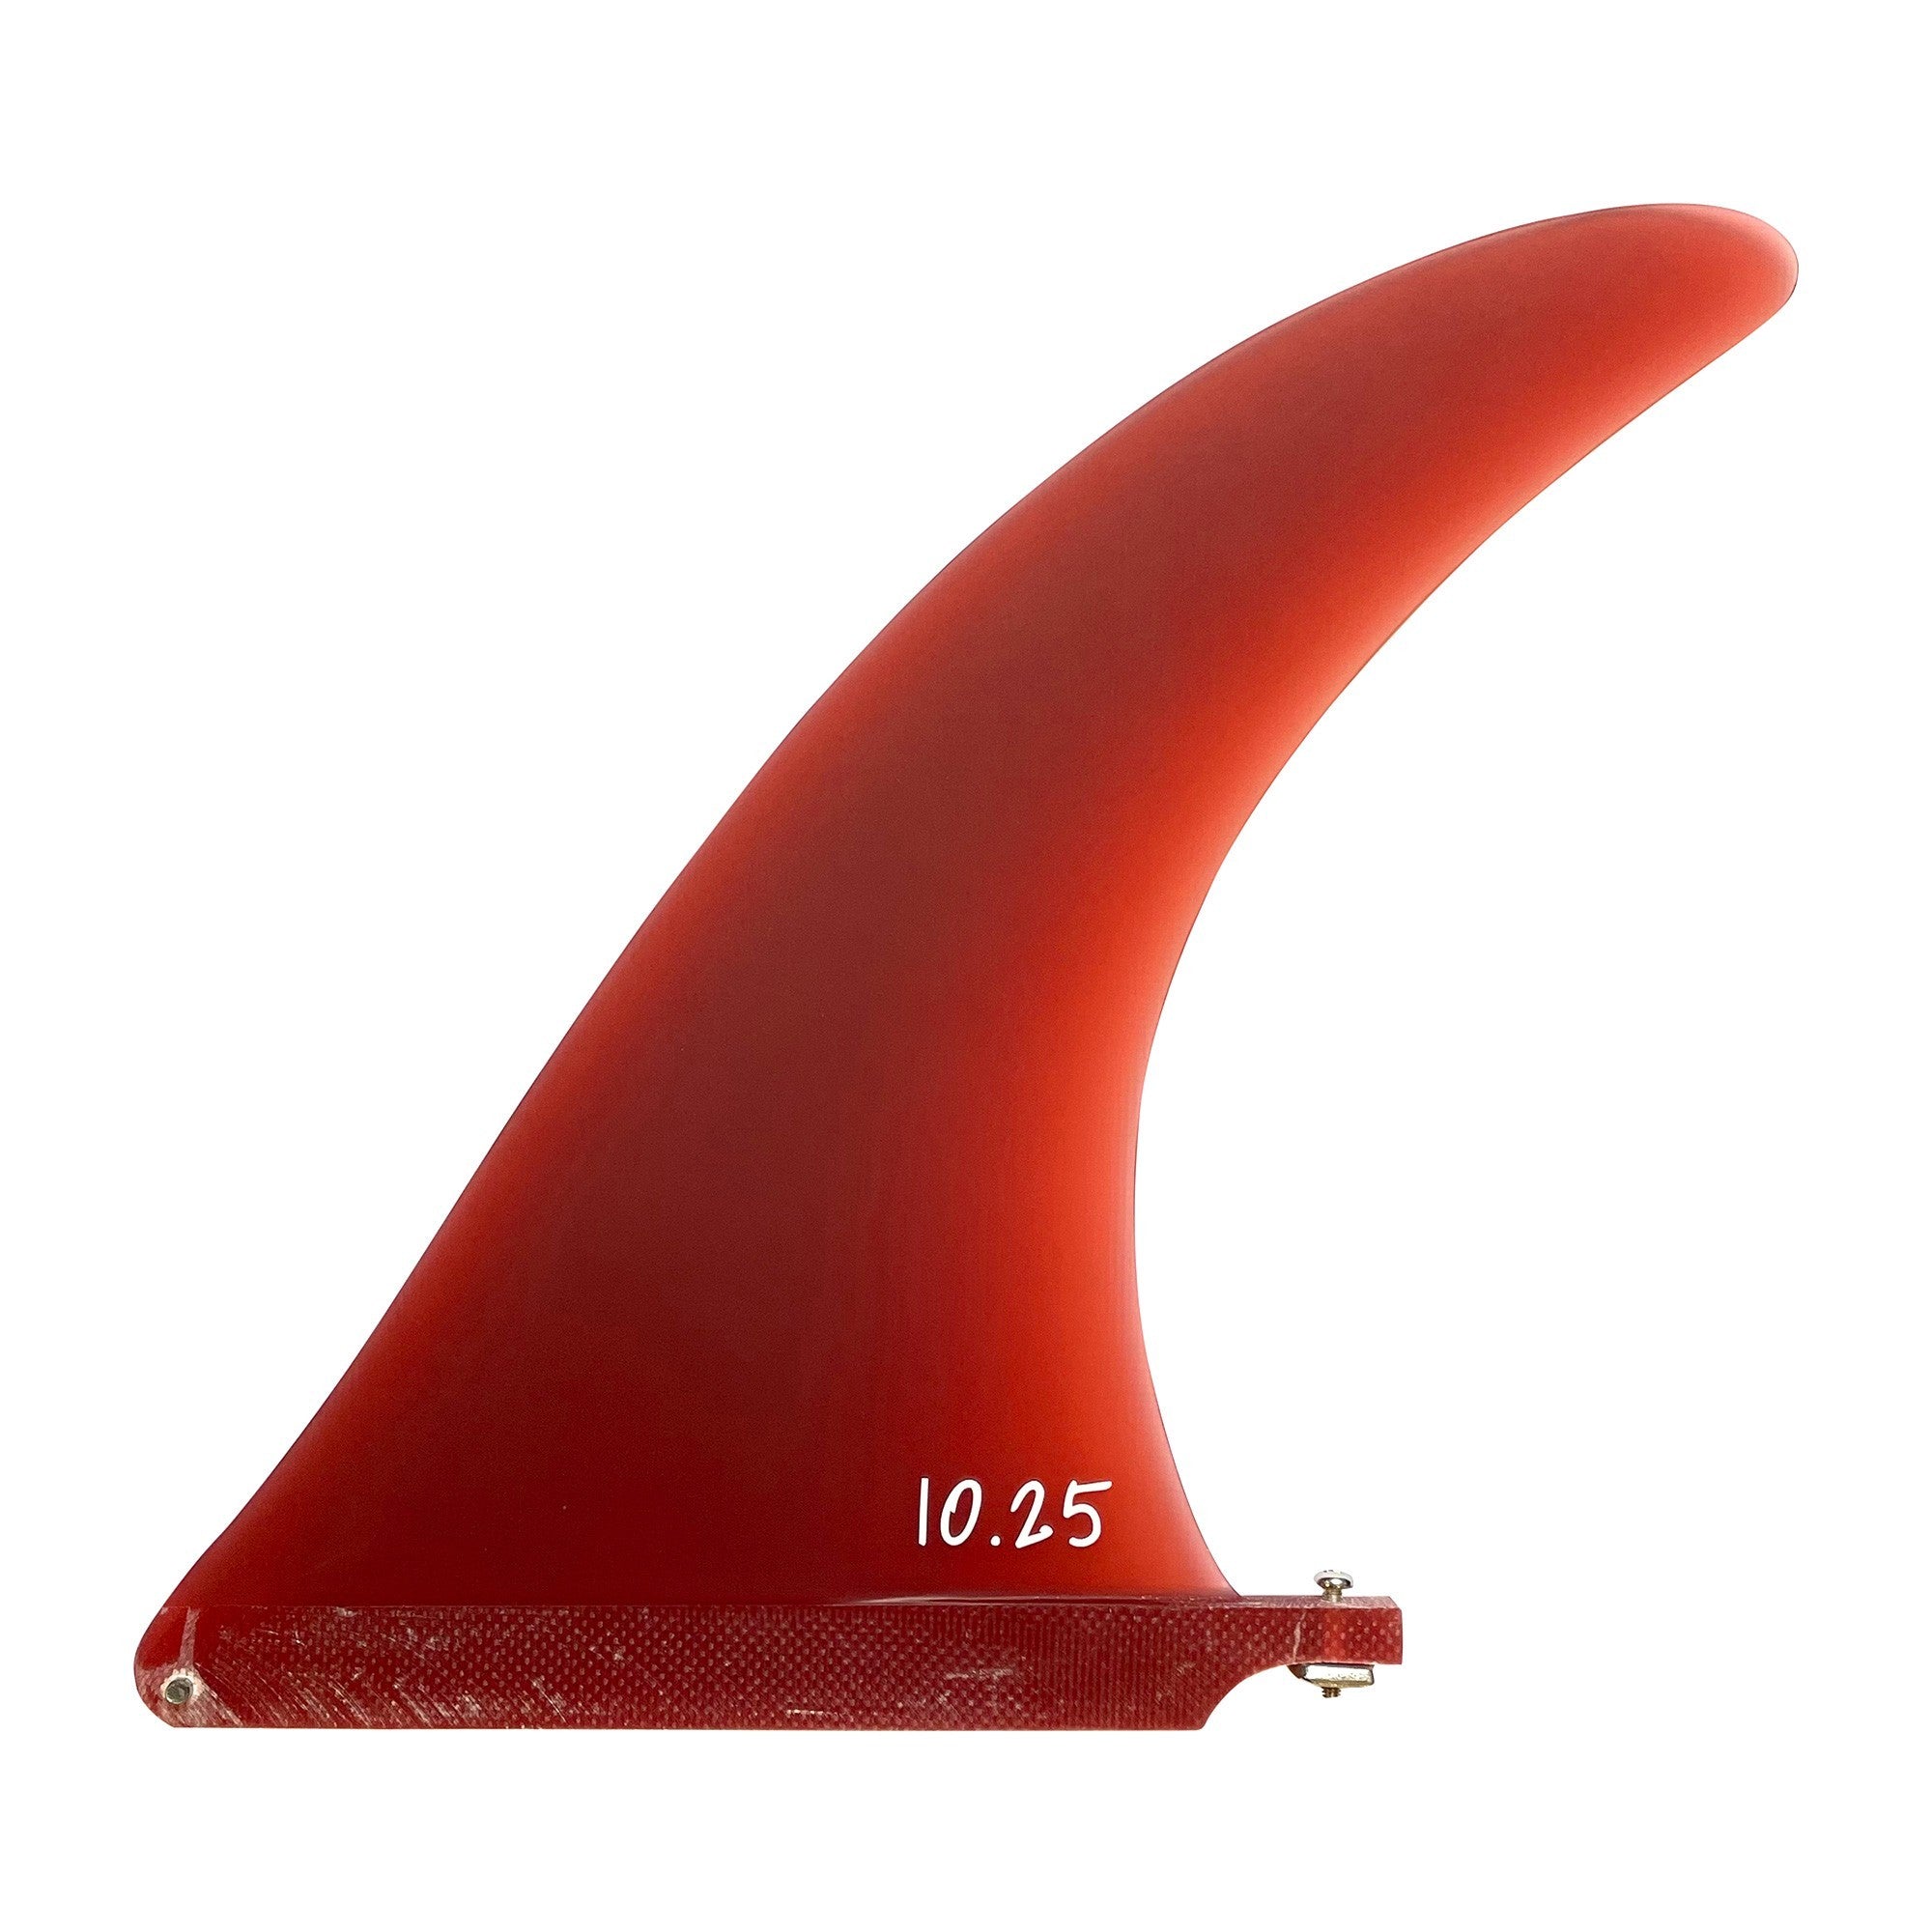 SISTEMA DE SURF - Aleta única de fibra de vidrio Dolphin (caja de EE. UU.) - 10.25" - Rojo